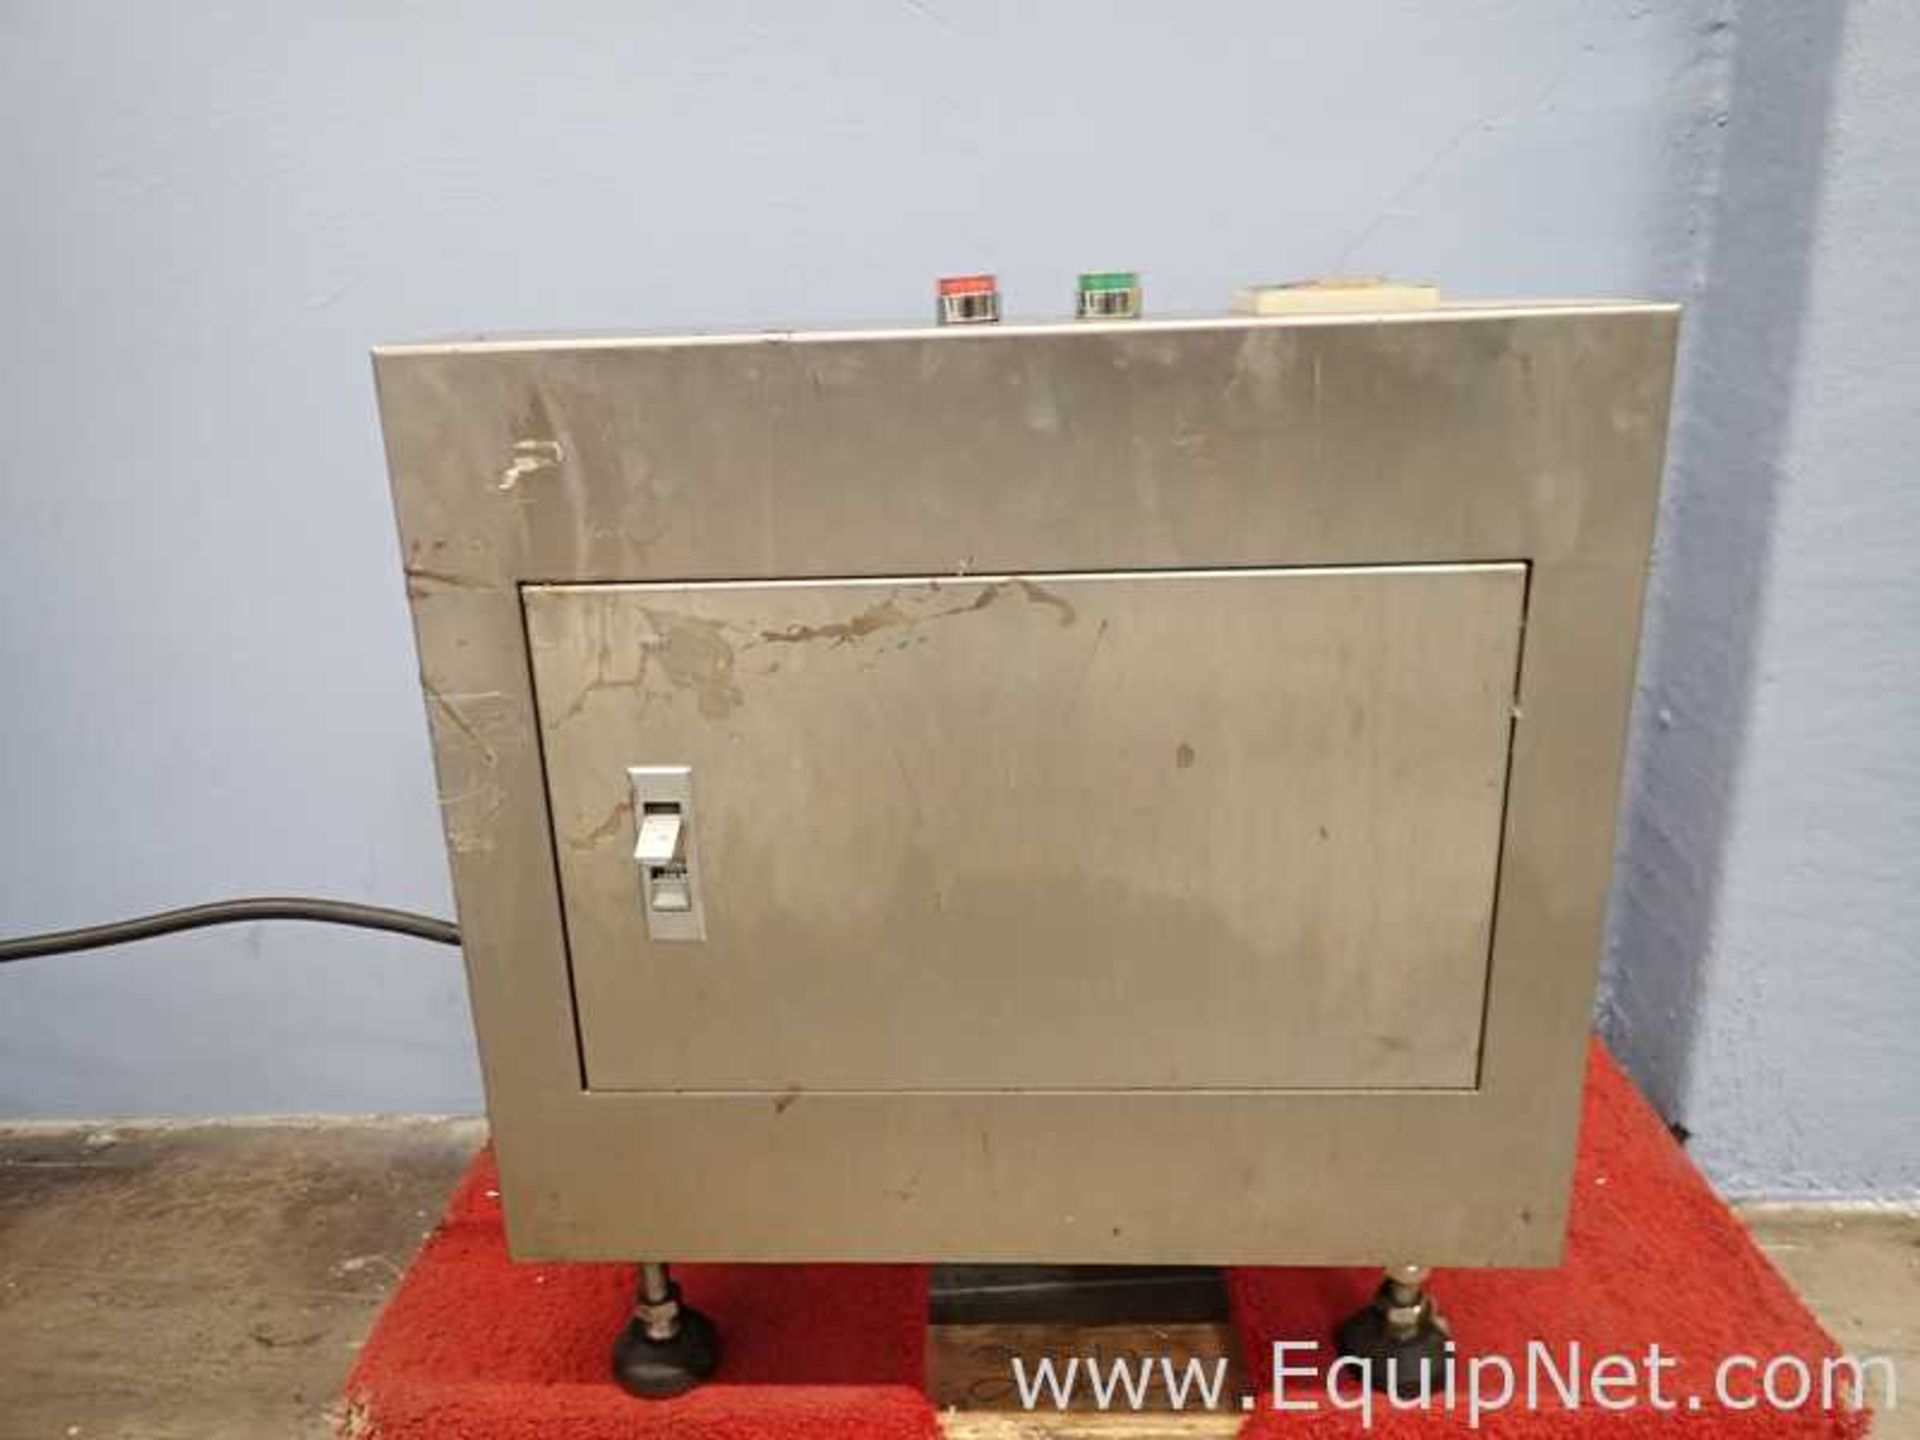 DESCRIPTION: Oil Recirculator Heater Reservoir EQUIPNET LISTING # 720241 HANDLING FEE: $20 MORE